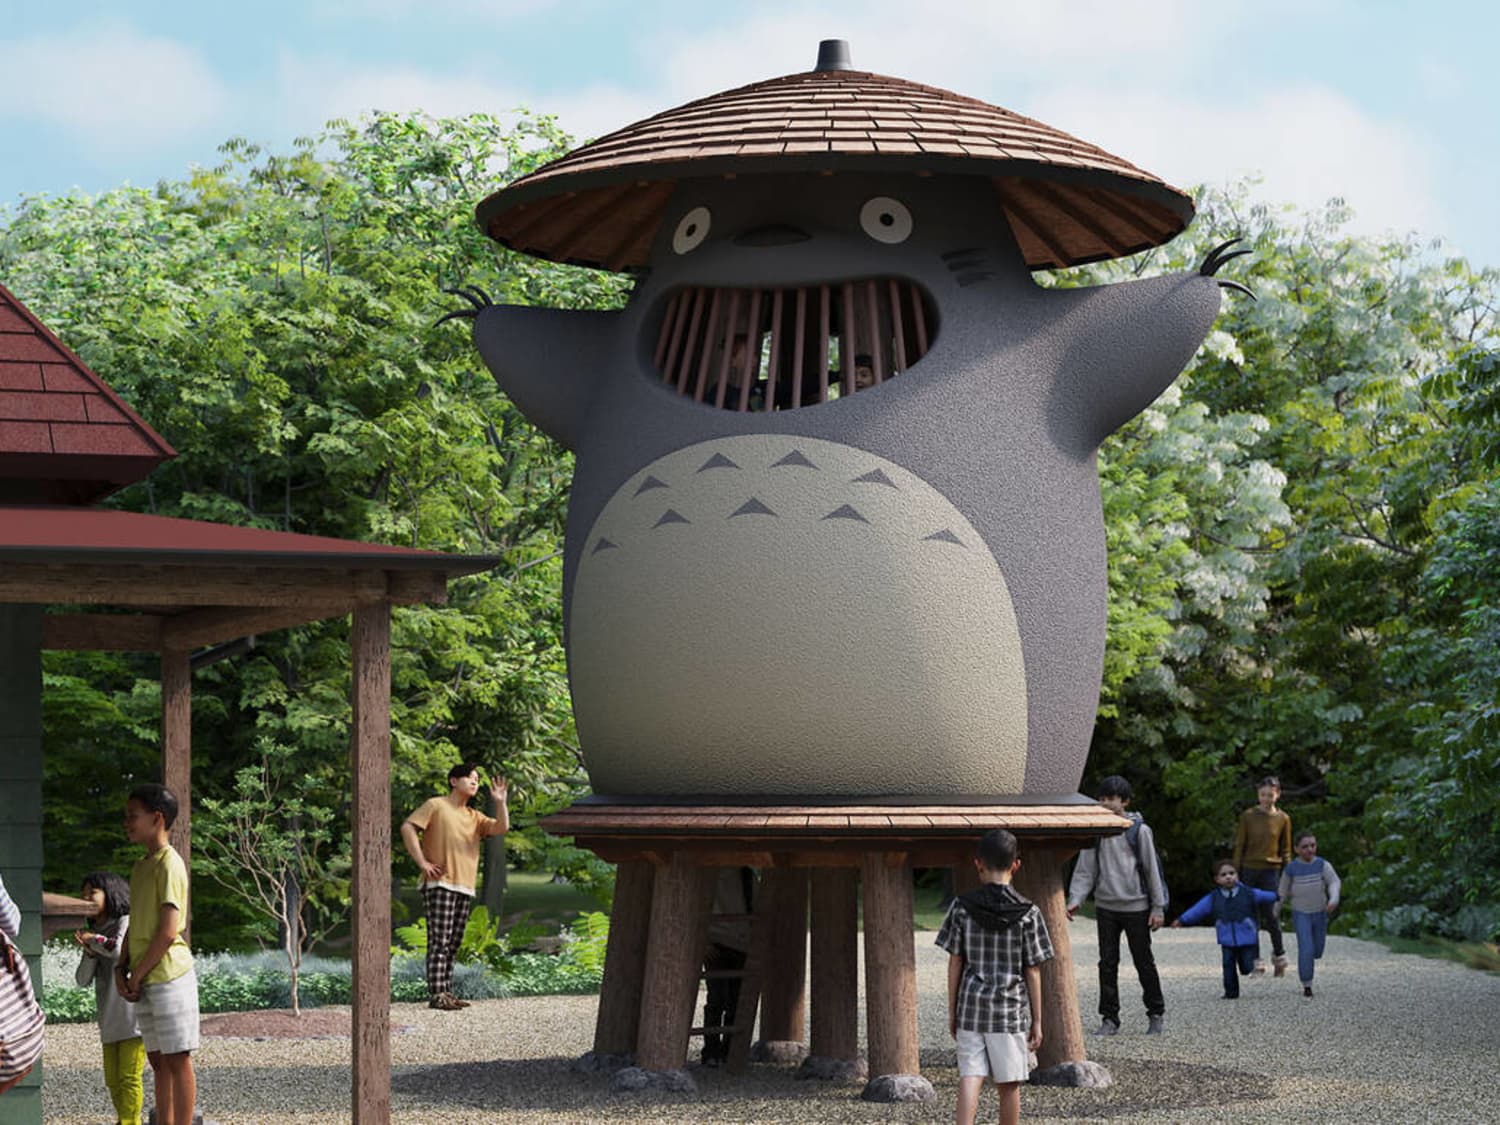 Take a trip on the Cat Bus: Studio Ghibli theme park prepares for